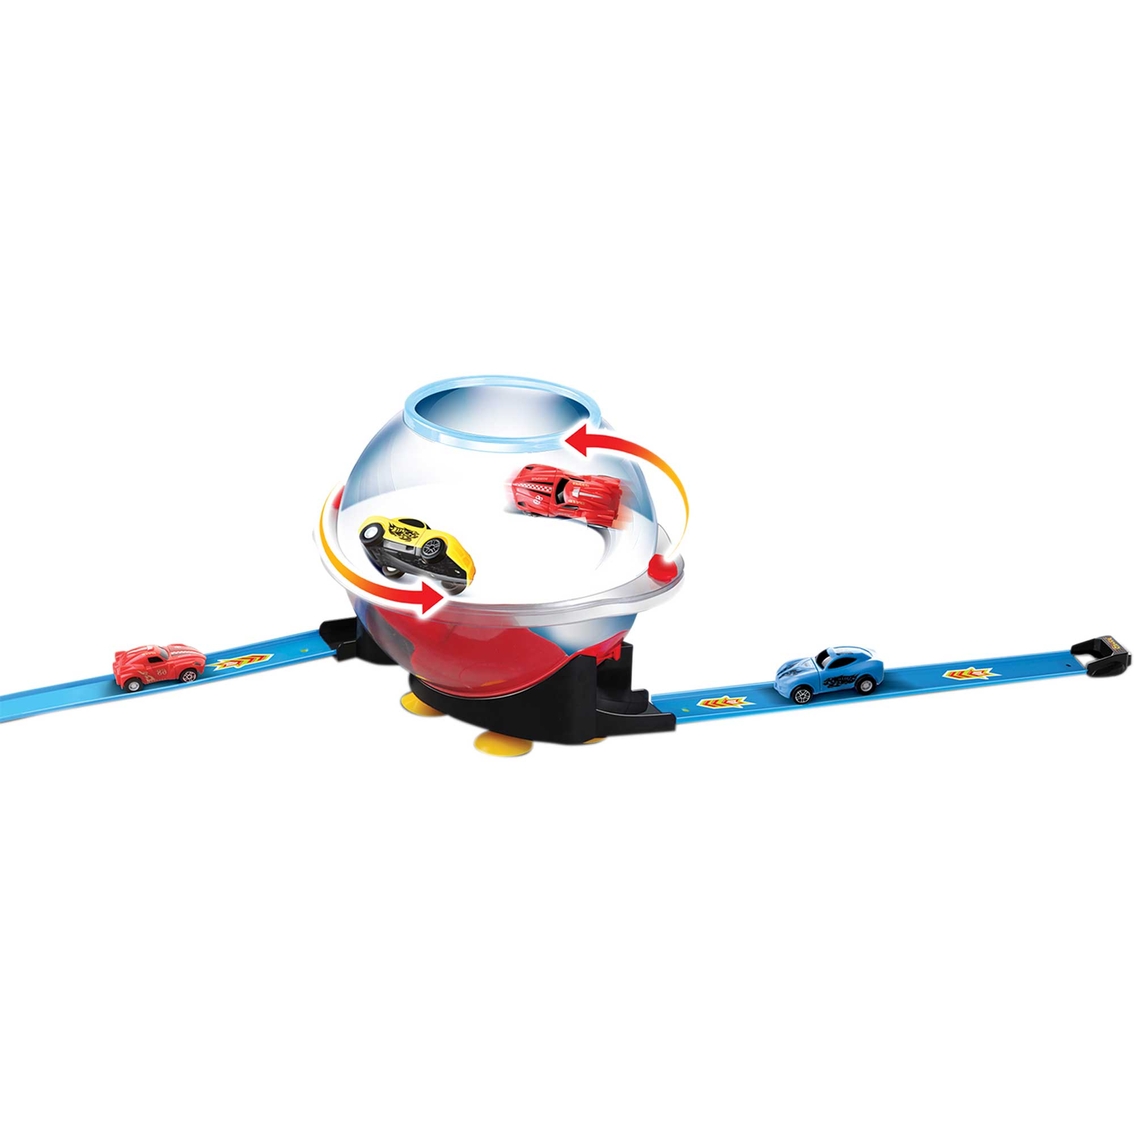 Jupiter Creations Spinforce Globe Toy Vehicle - Image 2 of 4